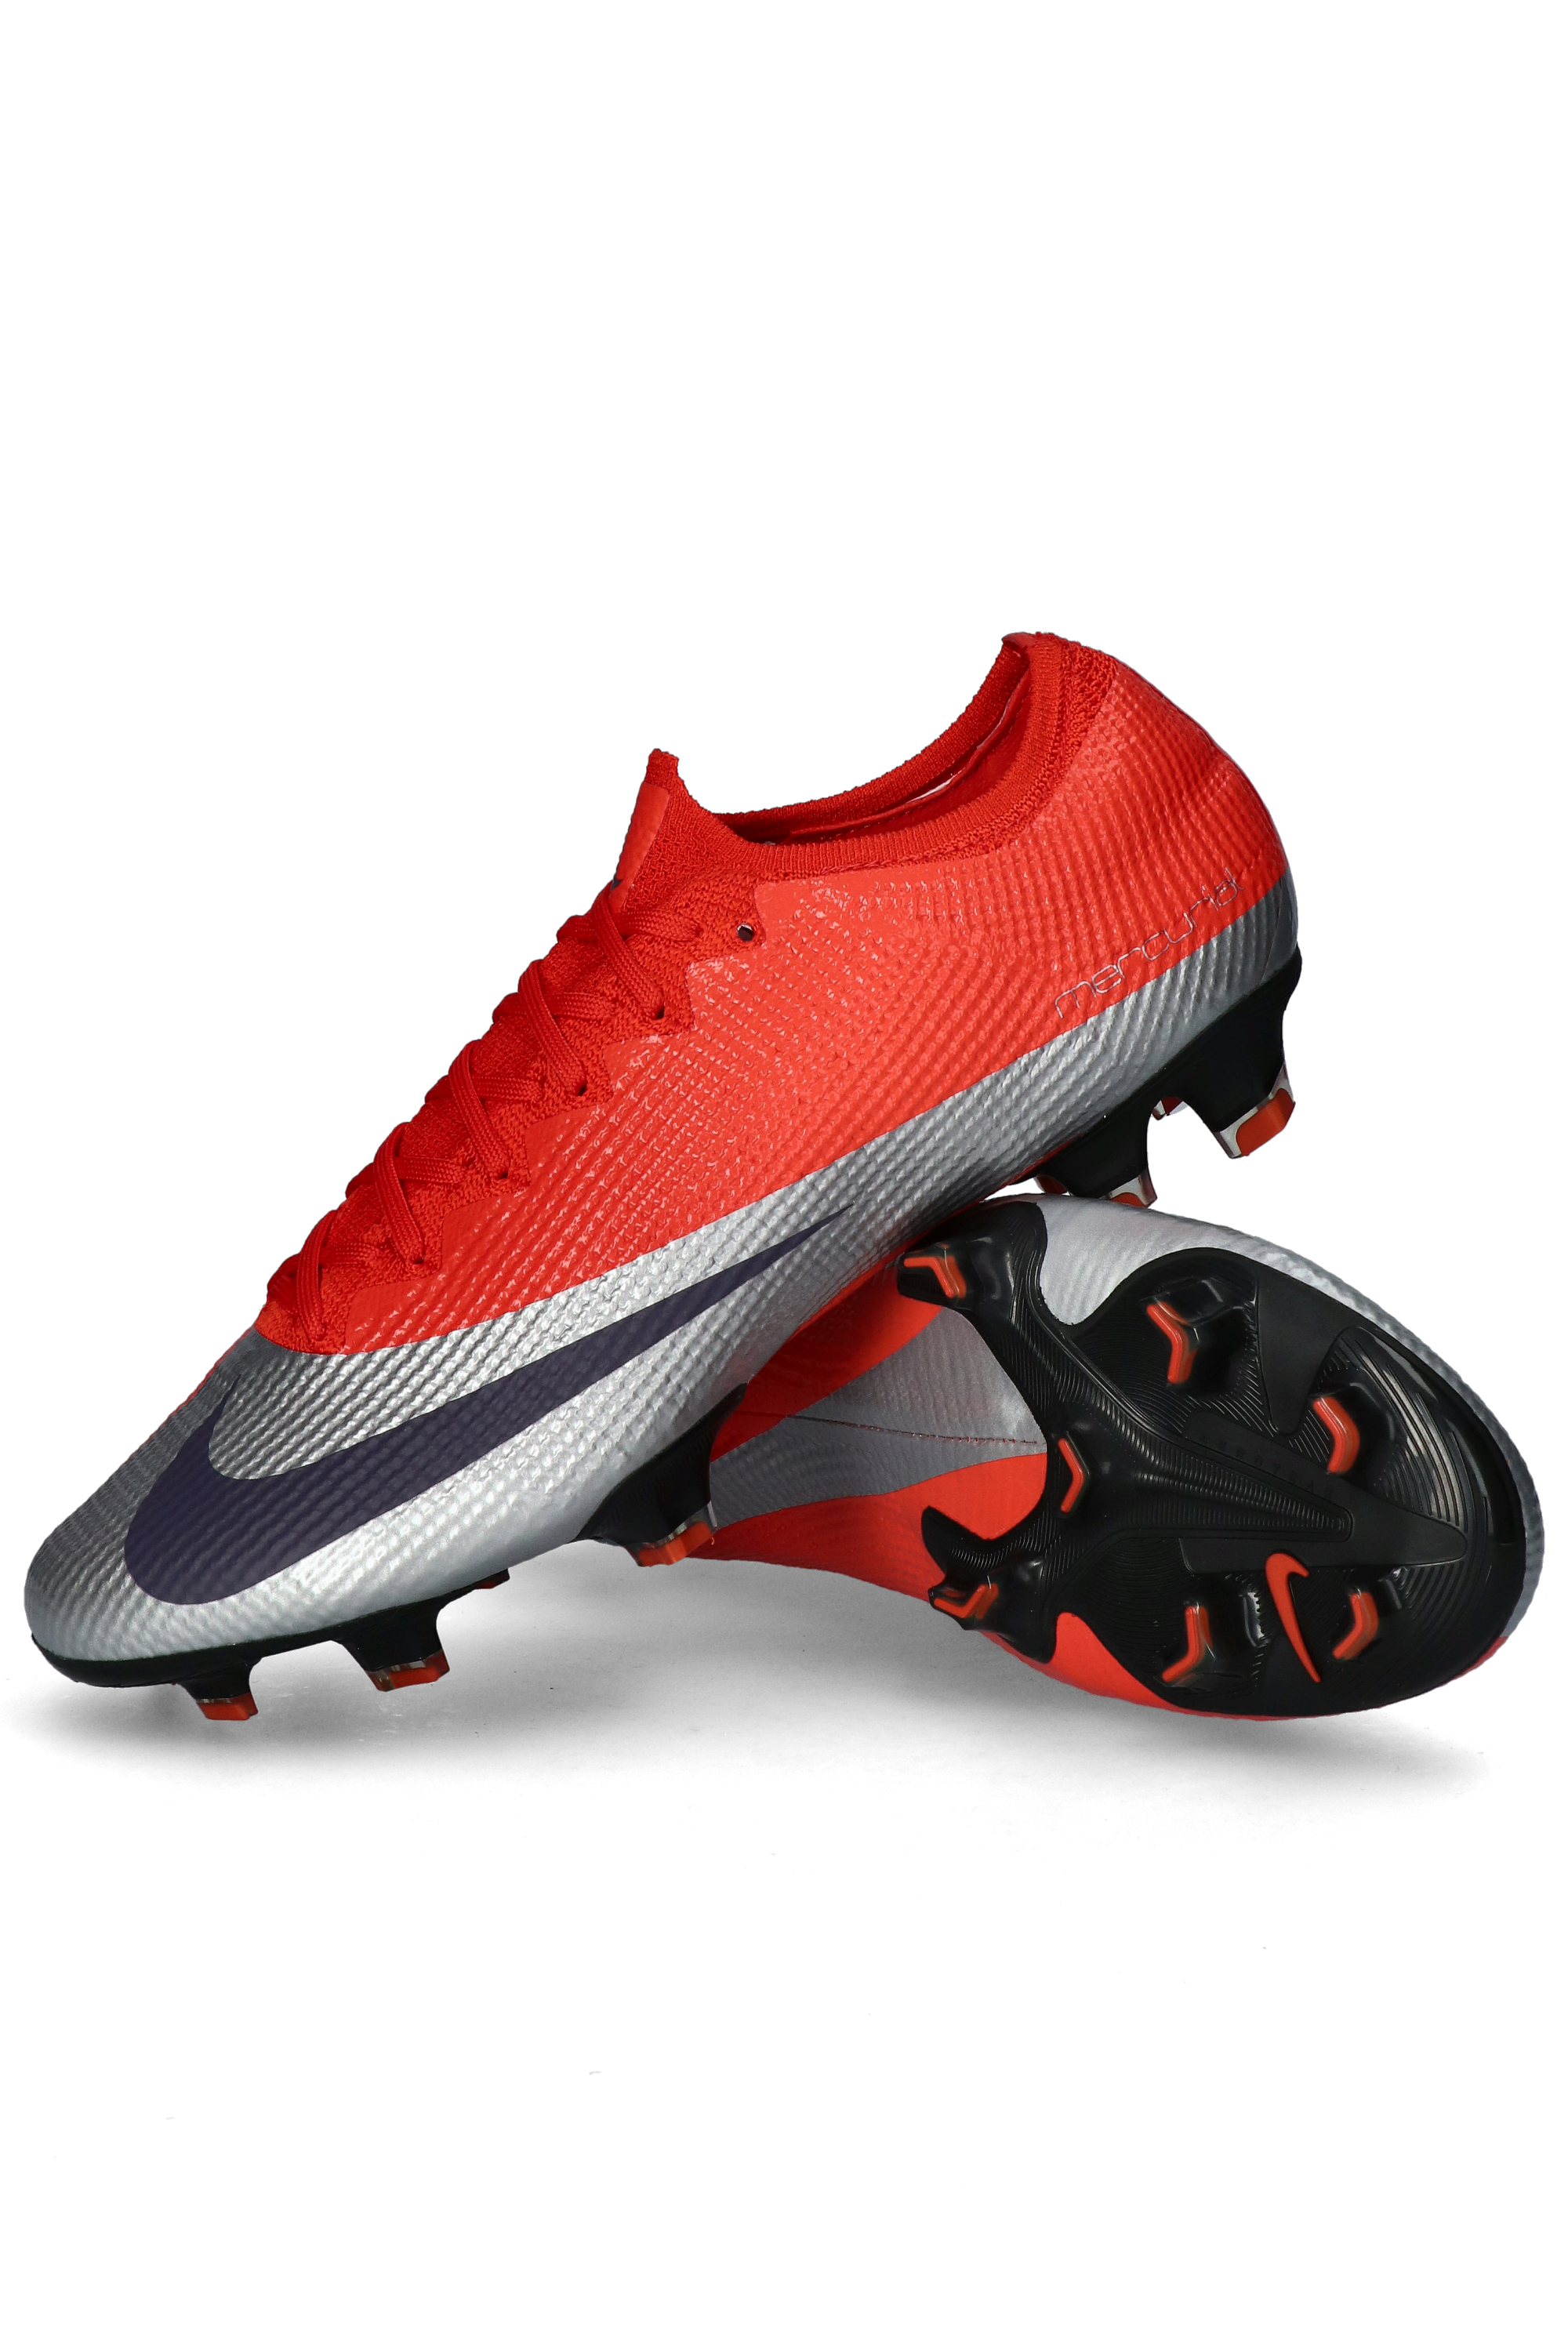 Nike Mercurial Vapor 13 Academy MG Football shoes.